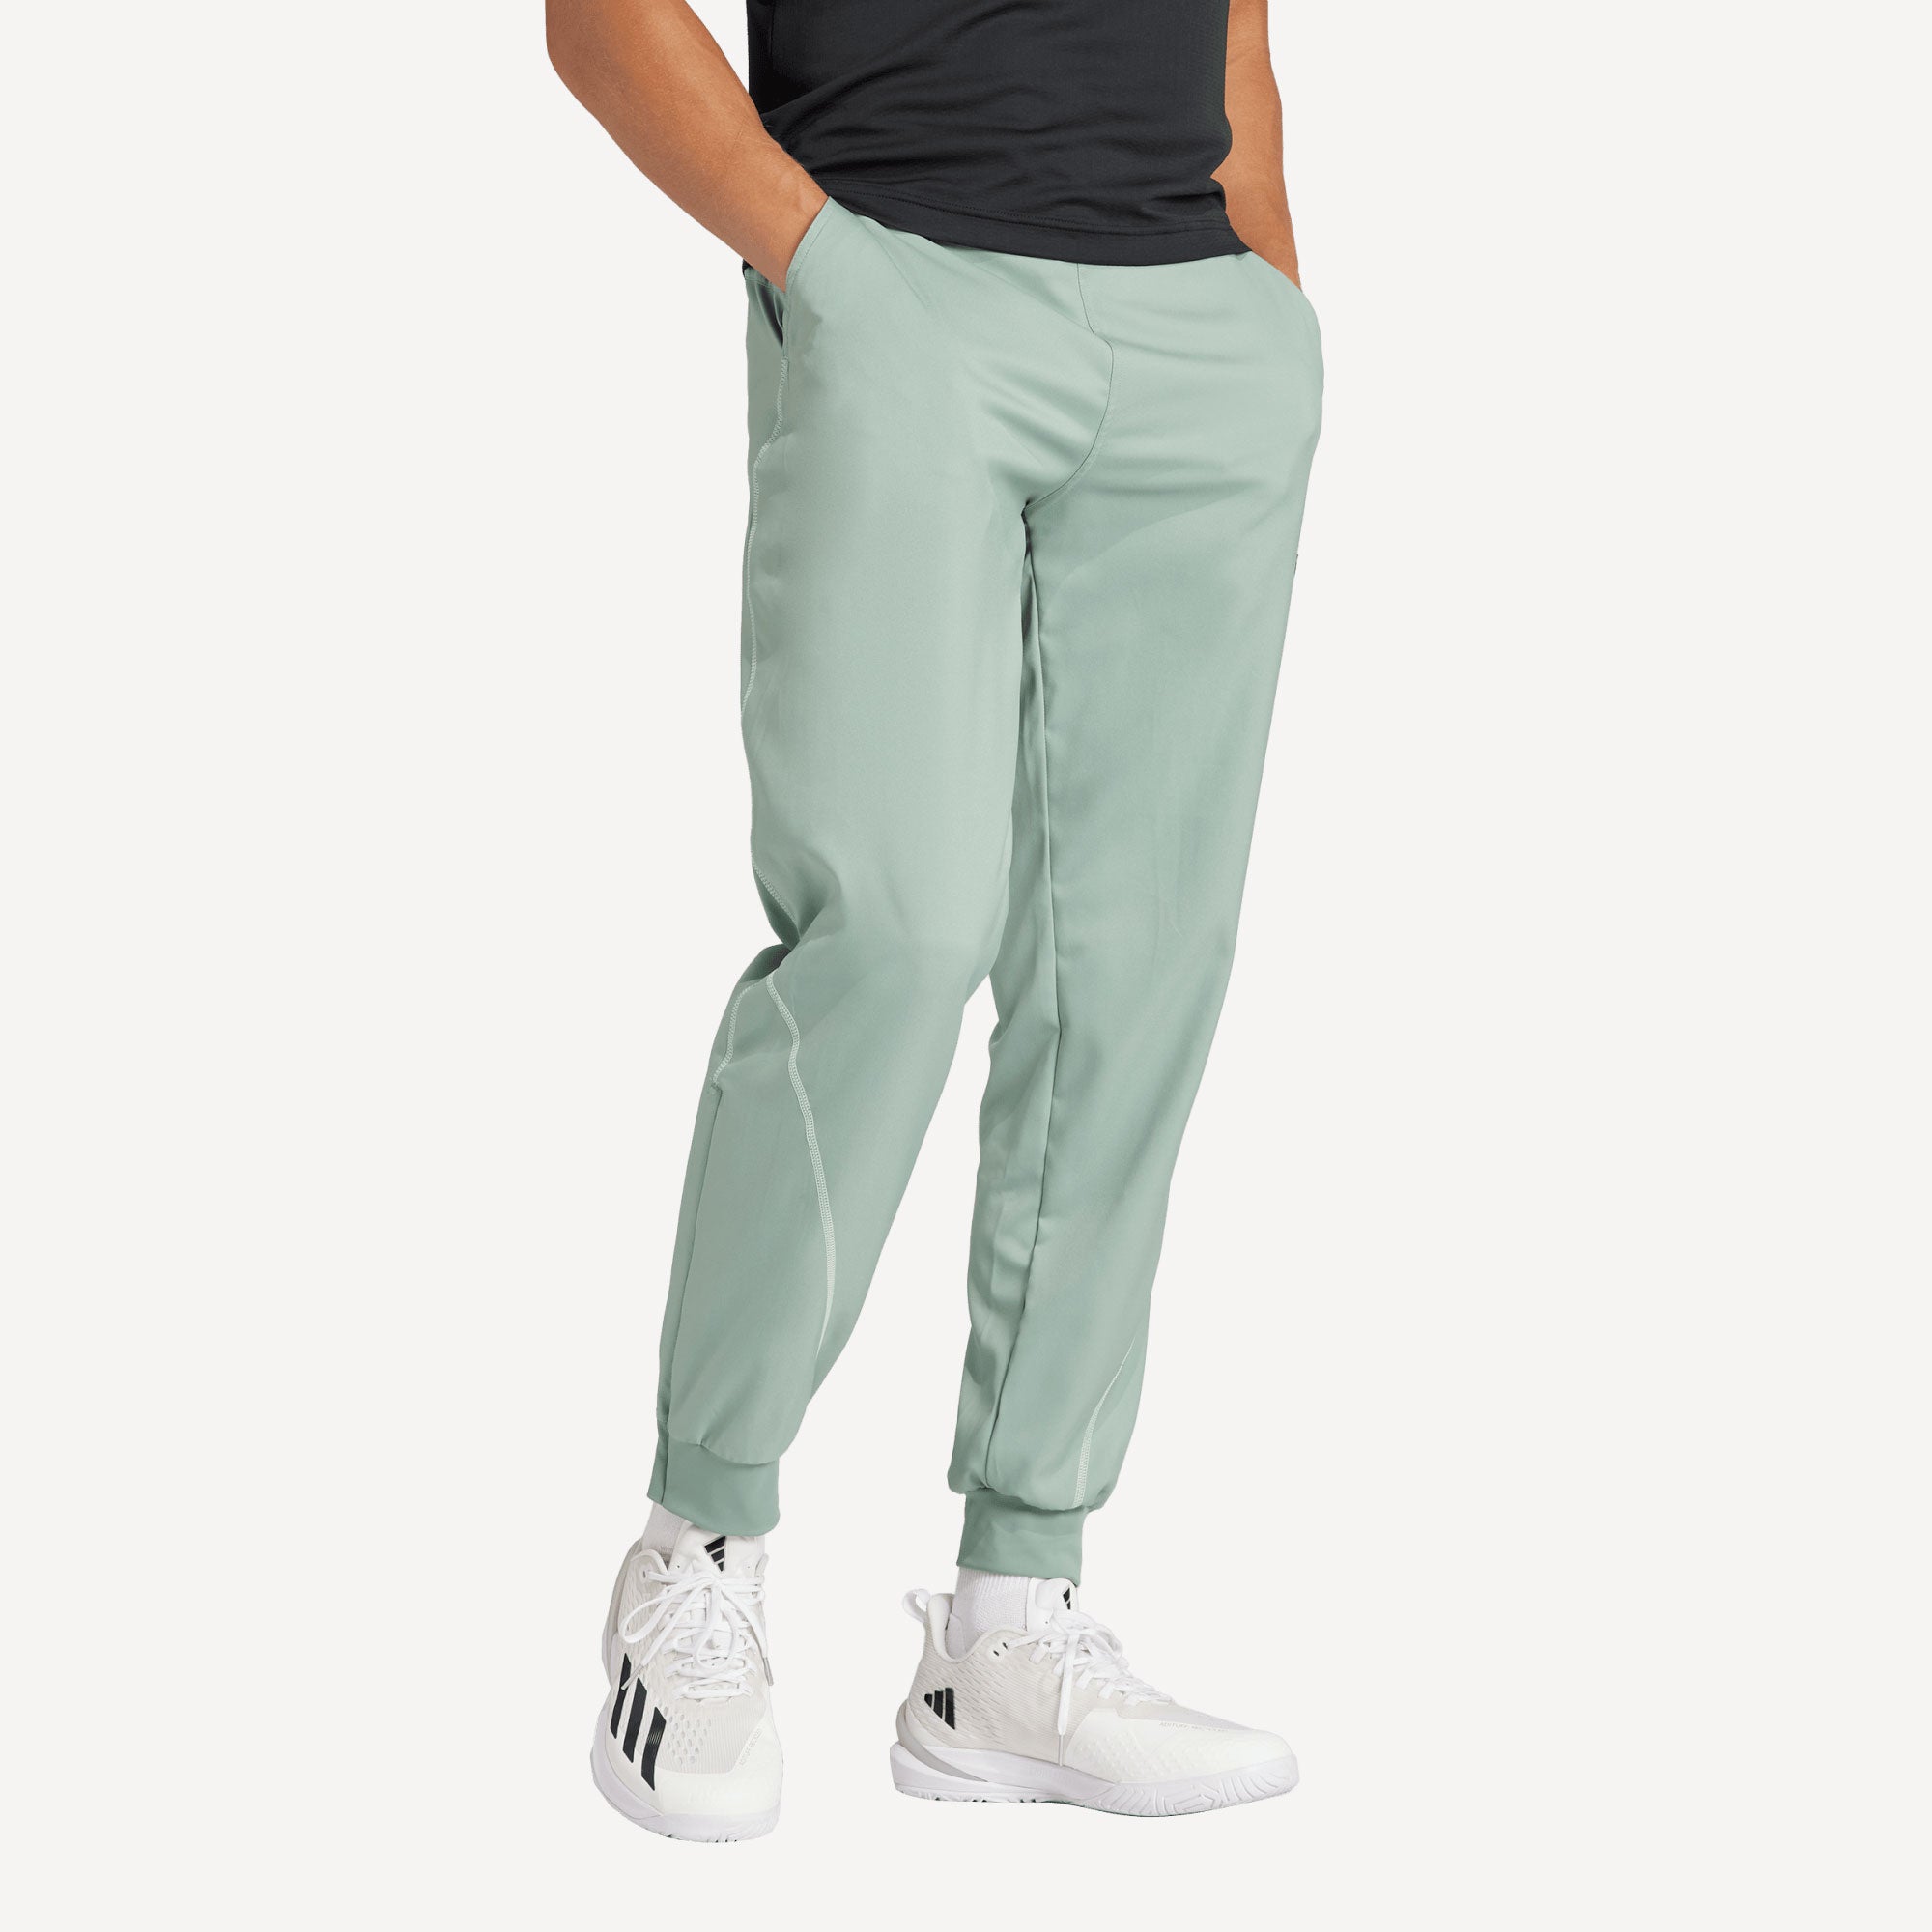 adidas Pro Melbourne Men's Tennis Pants - Green (1)